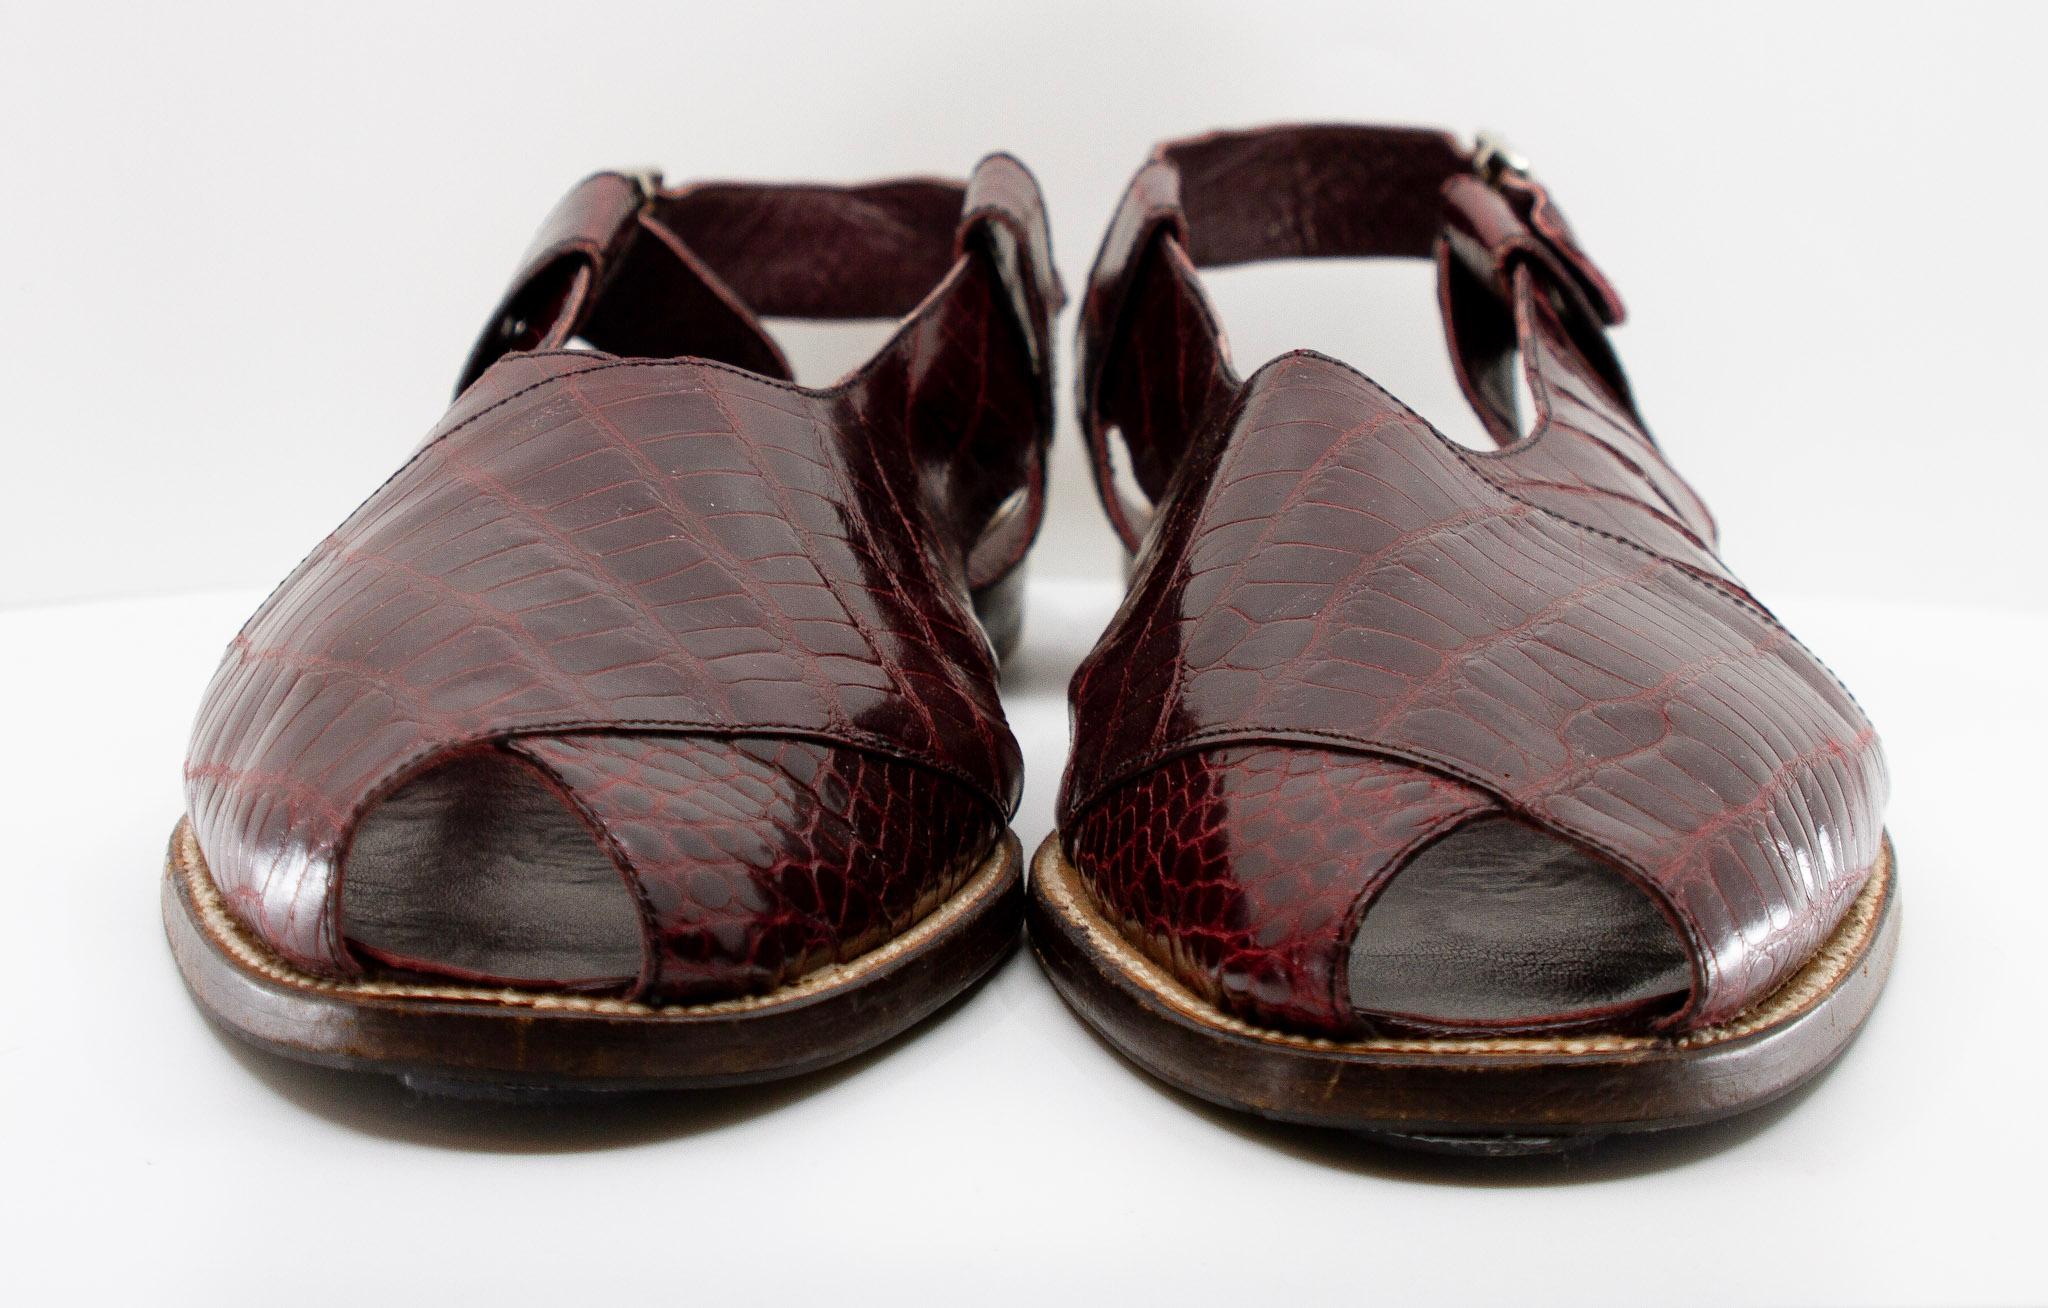 Manolo Blahnik, aubergine alligator open toe sandals, Estate of André Leon Talley.

Size 13

Provenance: Estate of André Leon Talley